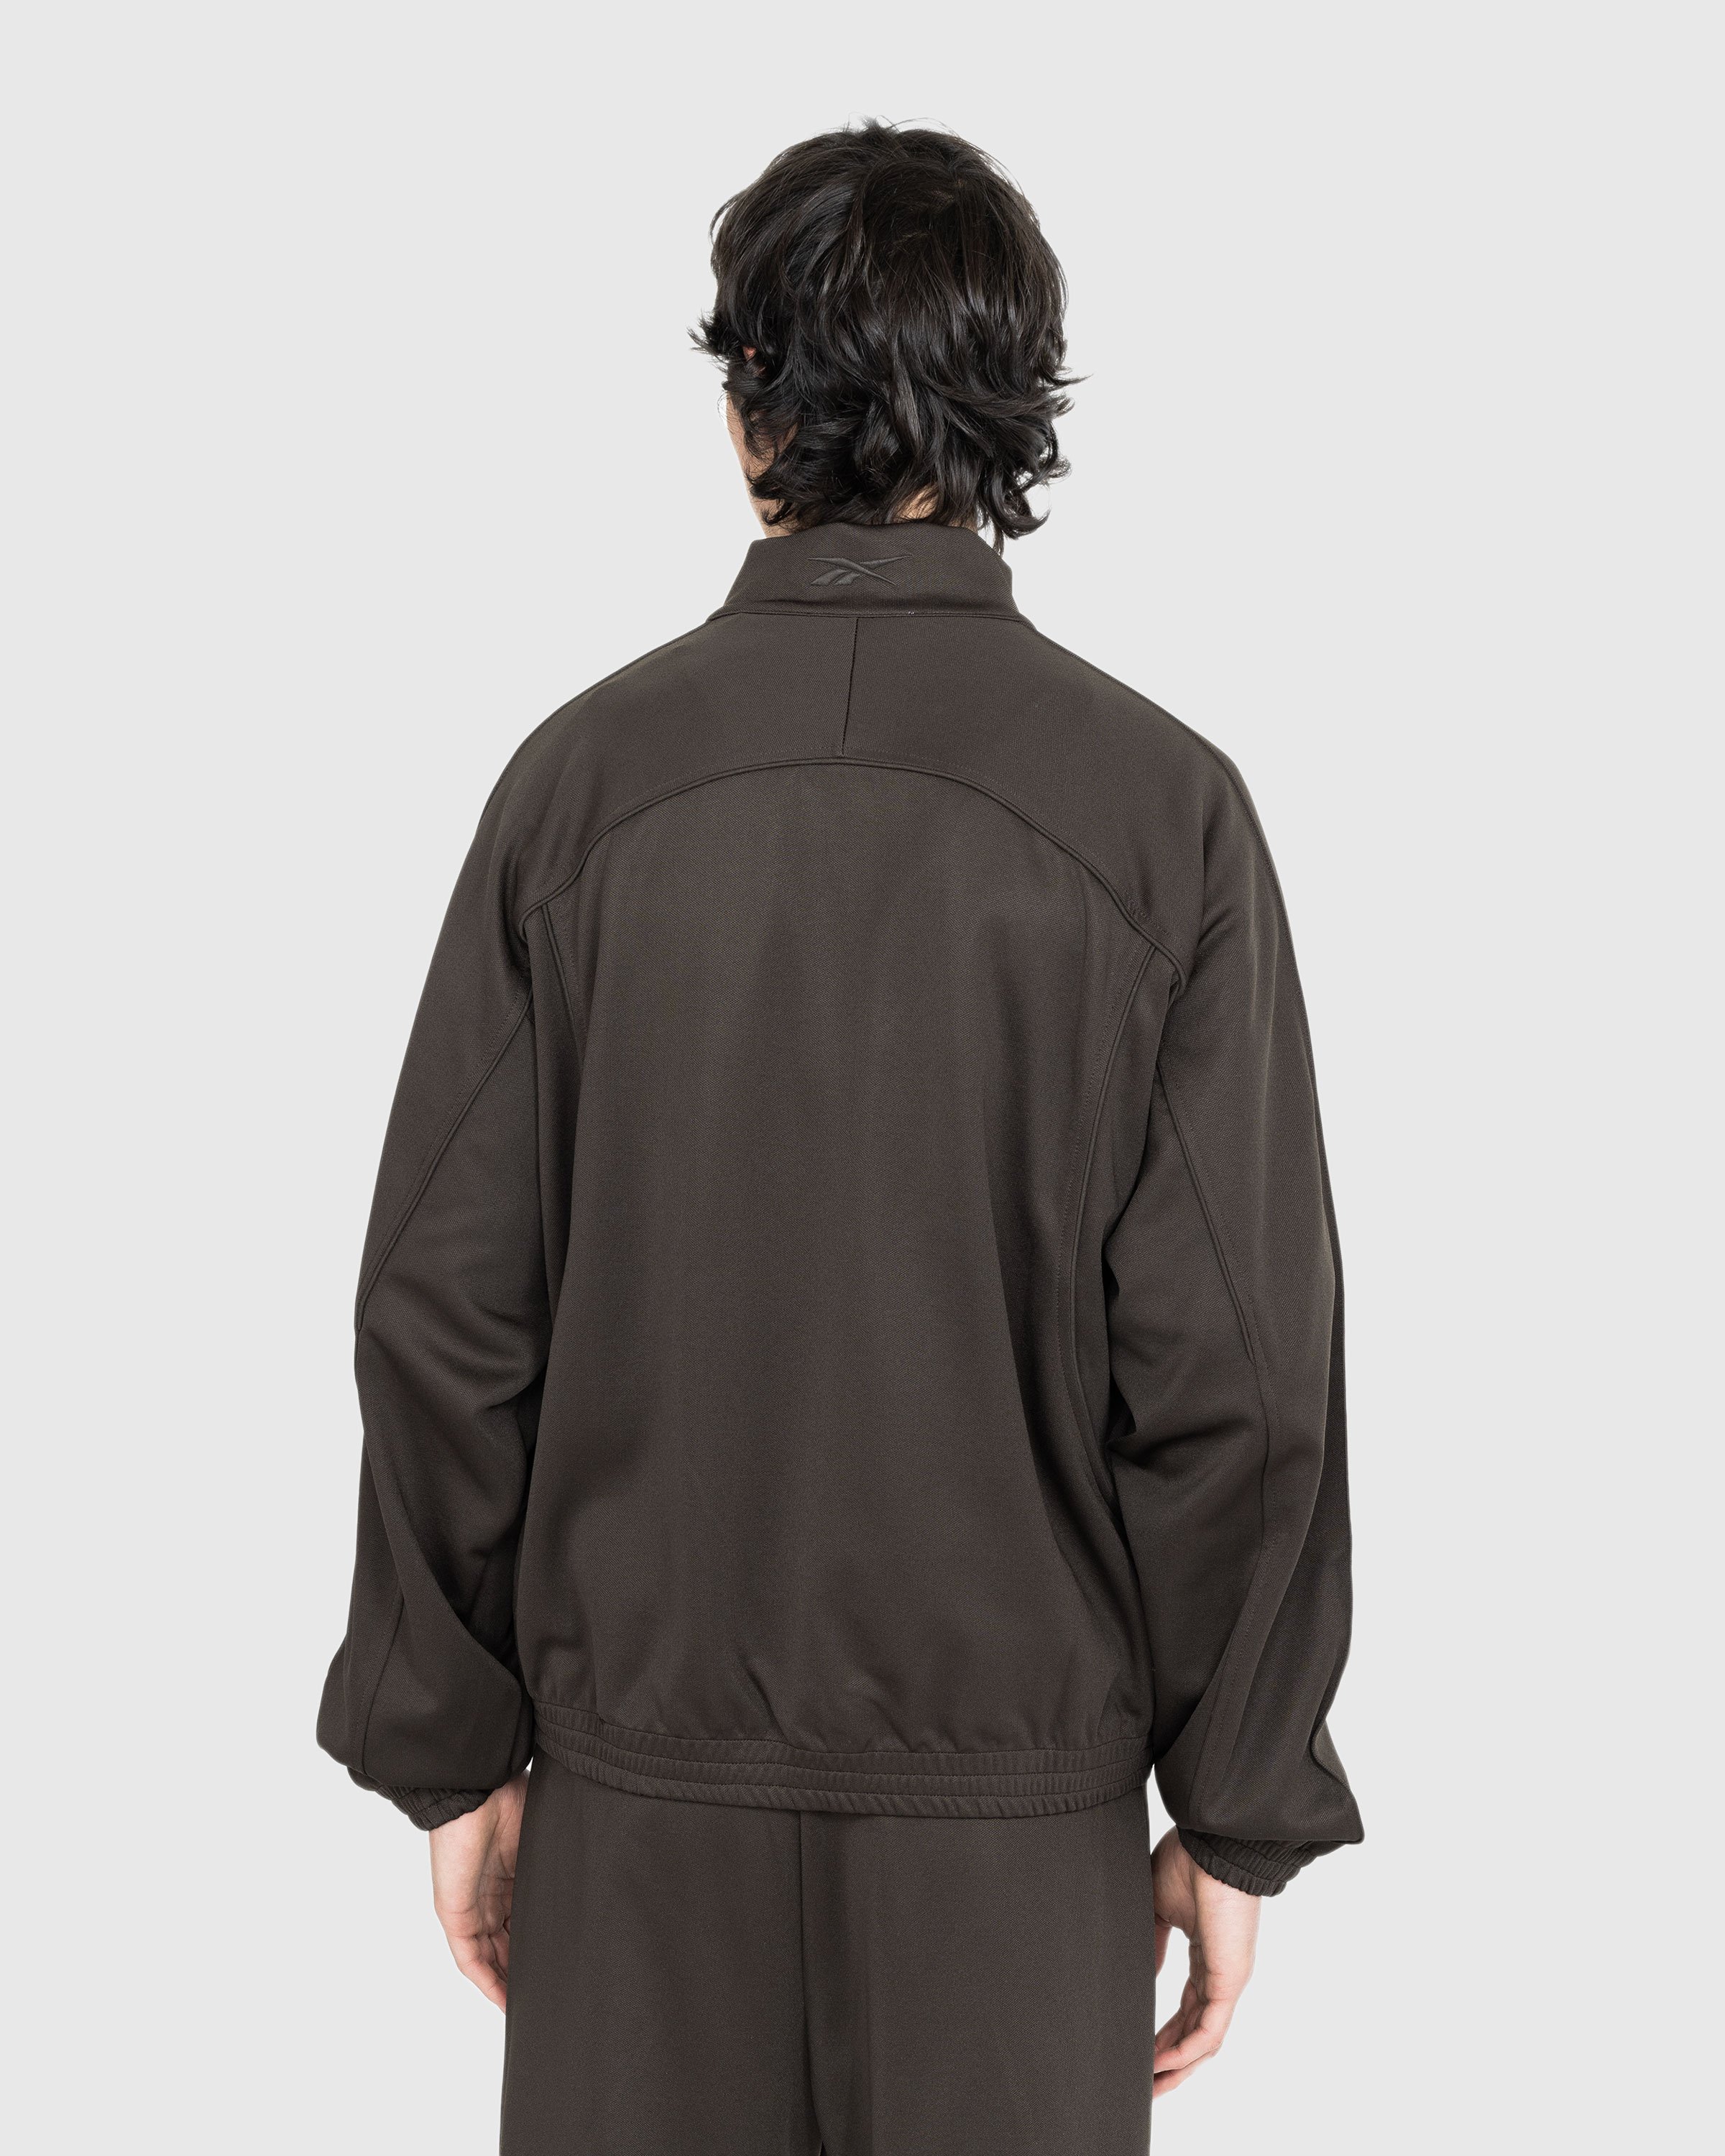 Reebok - Piped Track Jacket Moro - Clothing - Brown - Image 3